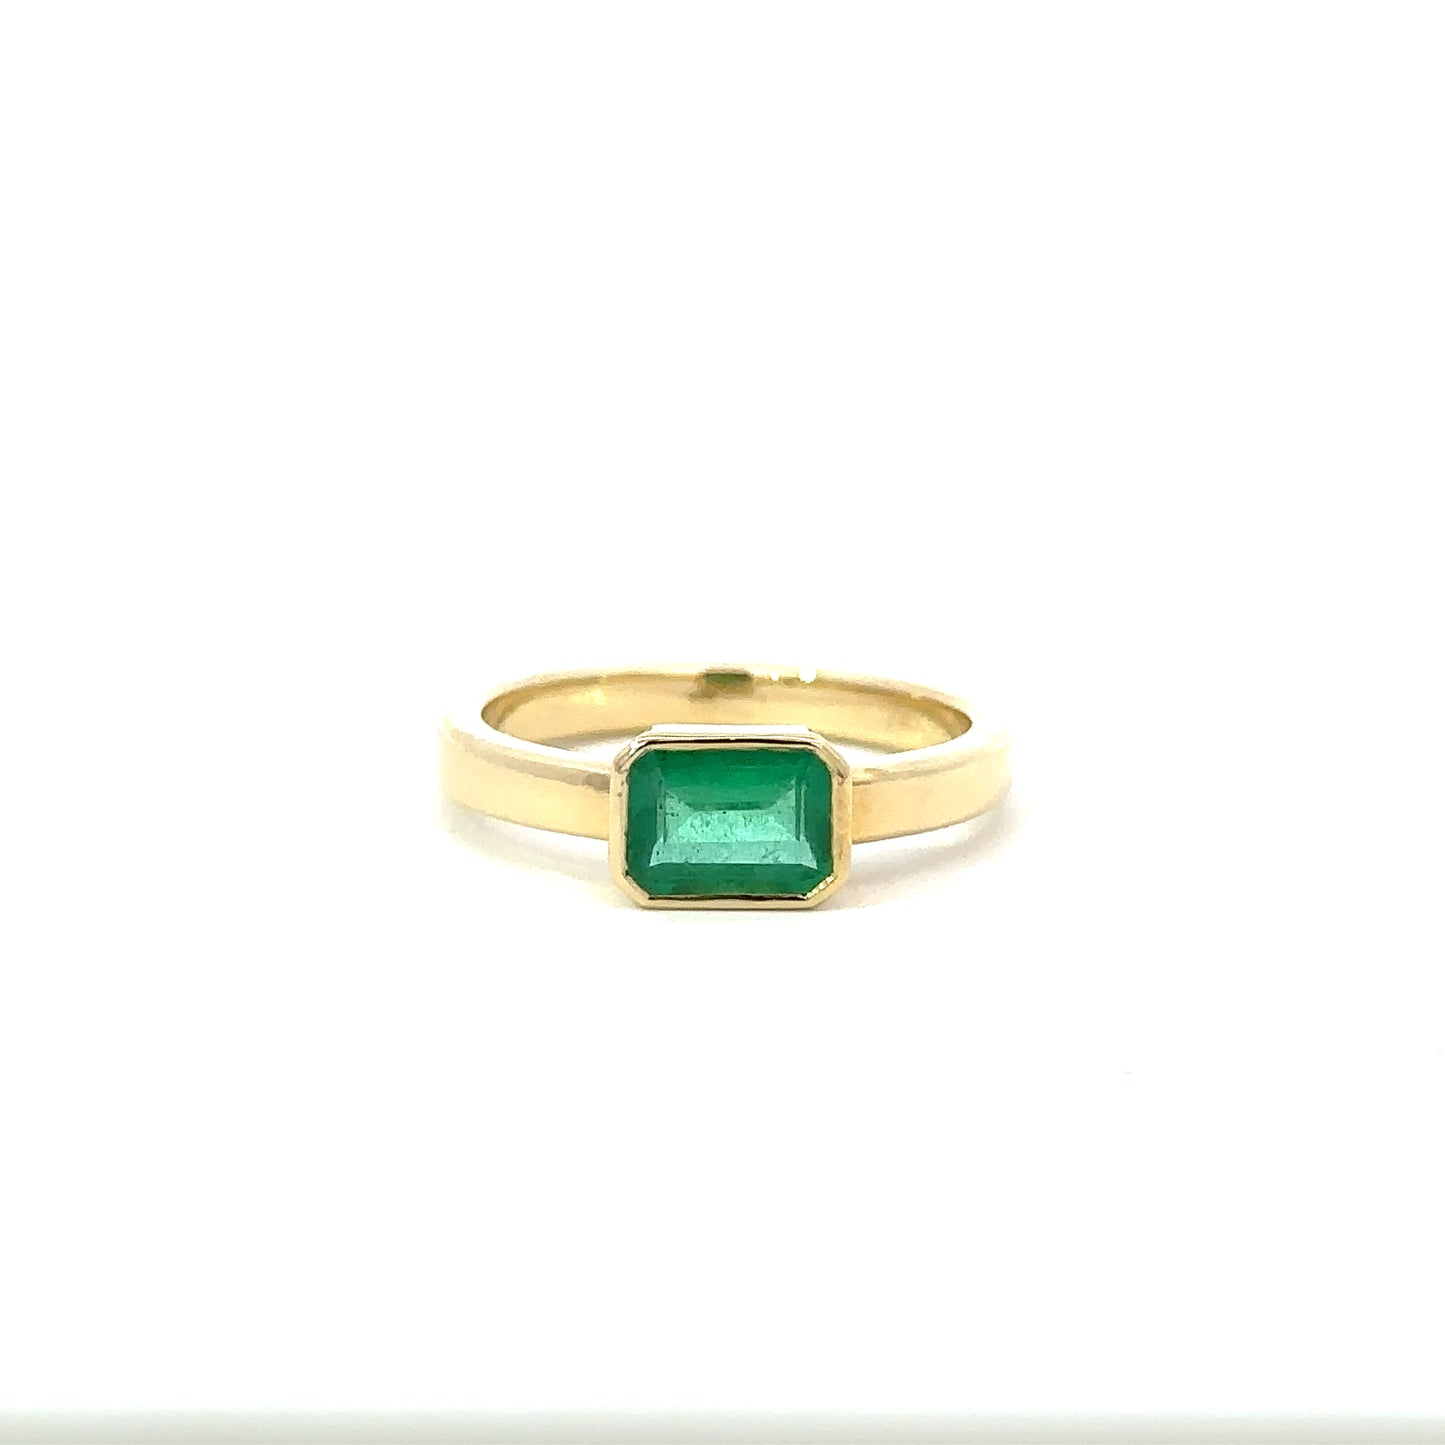 thea ring - natural emerald